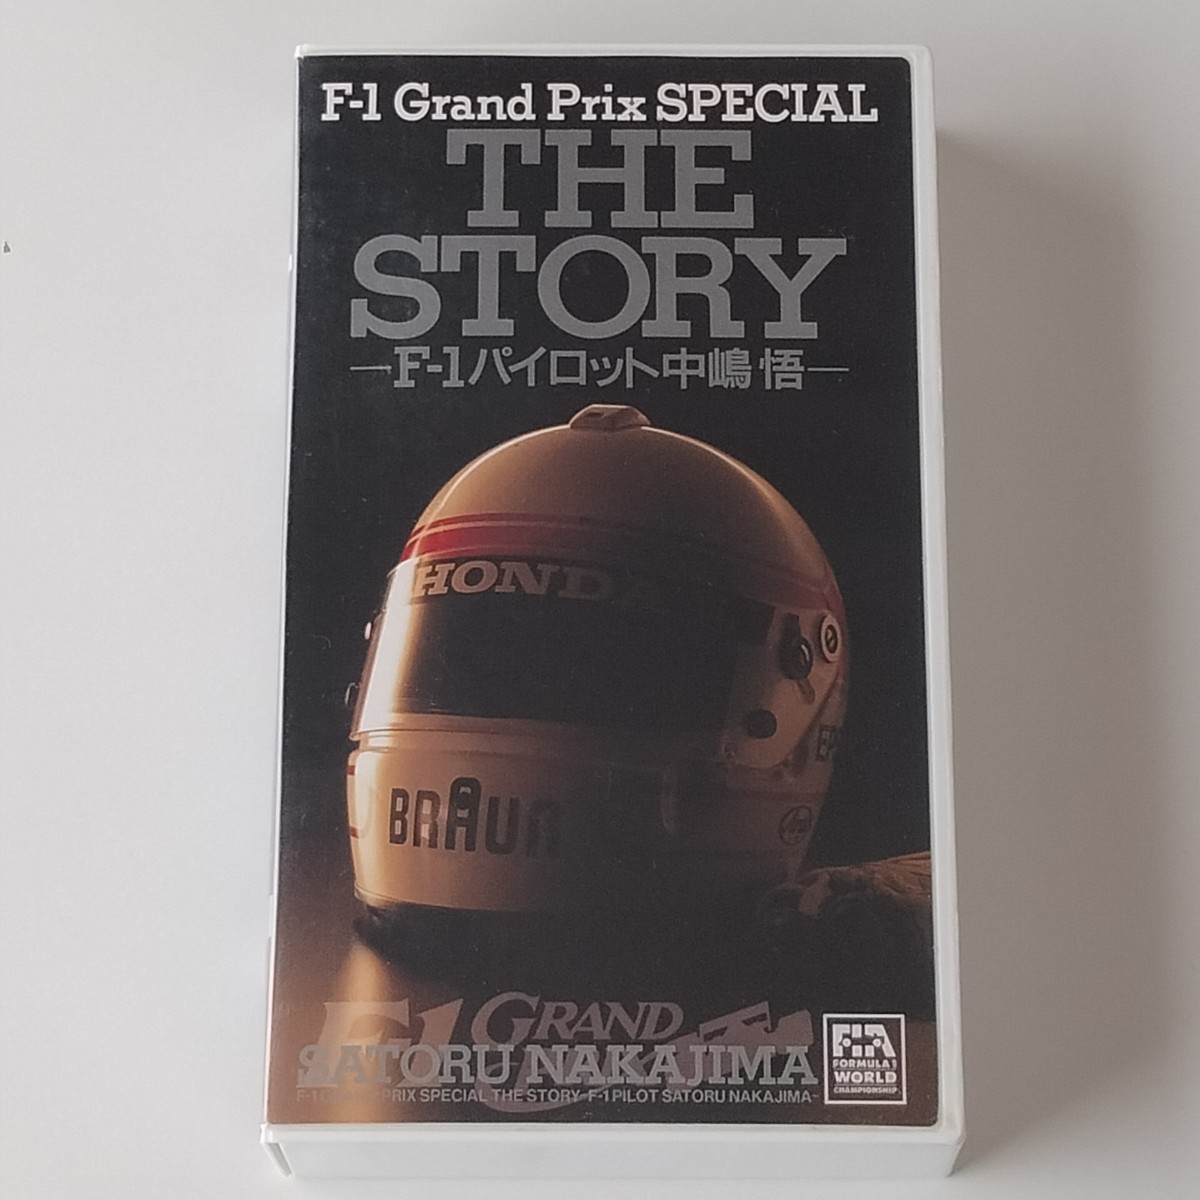 [VHS/ video ]THE STORY F-1 Pilot Nakajima Satoru (PCVP-10744)F-1 Grand Prix * special / The * -stroke - Lee /F1 GRAND PRIX SPECIAL